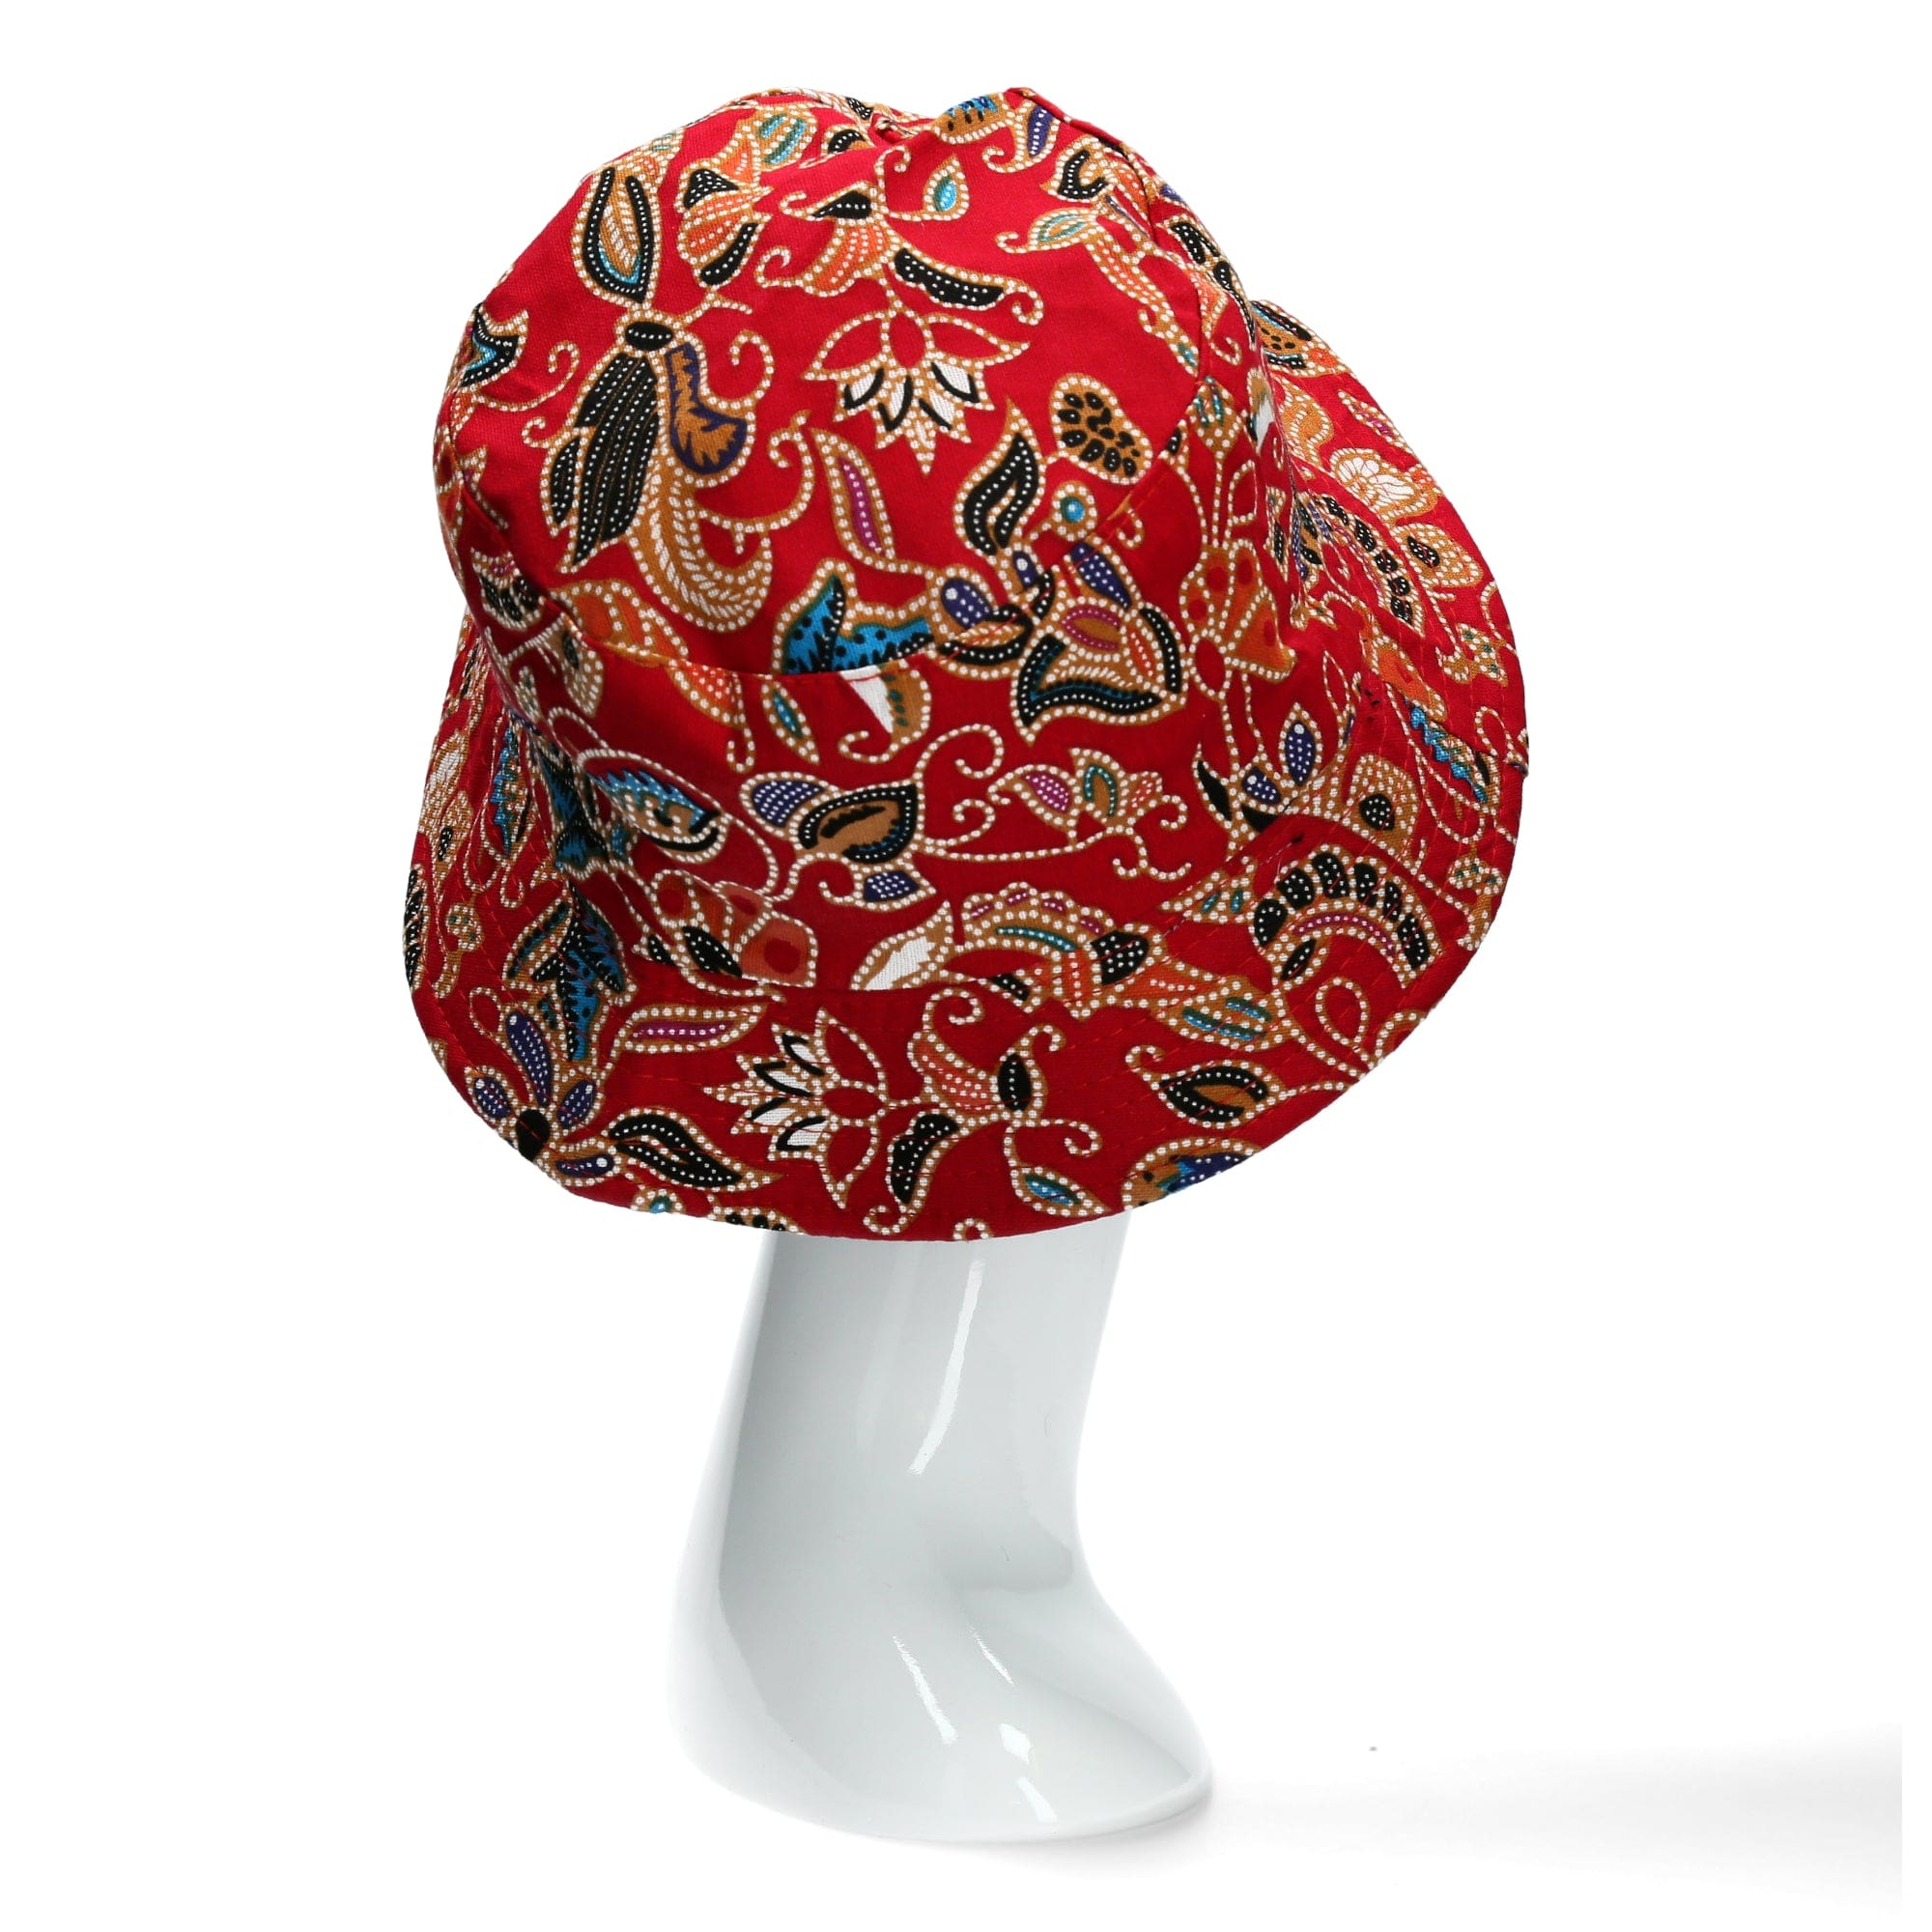 Chapeau Cloche Surrey - Hats